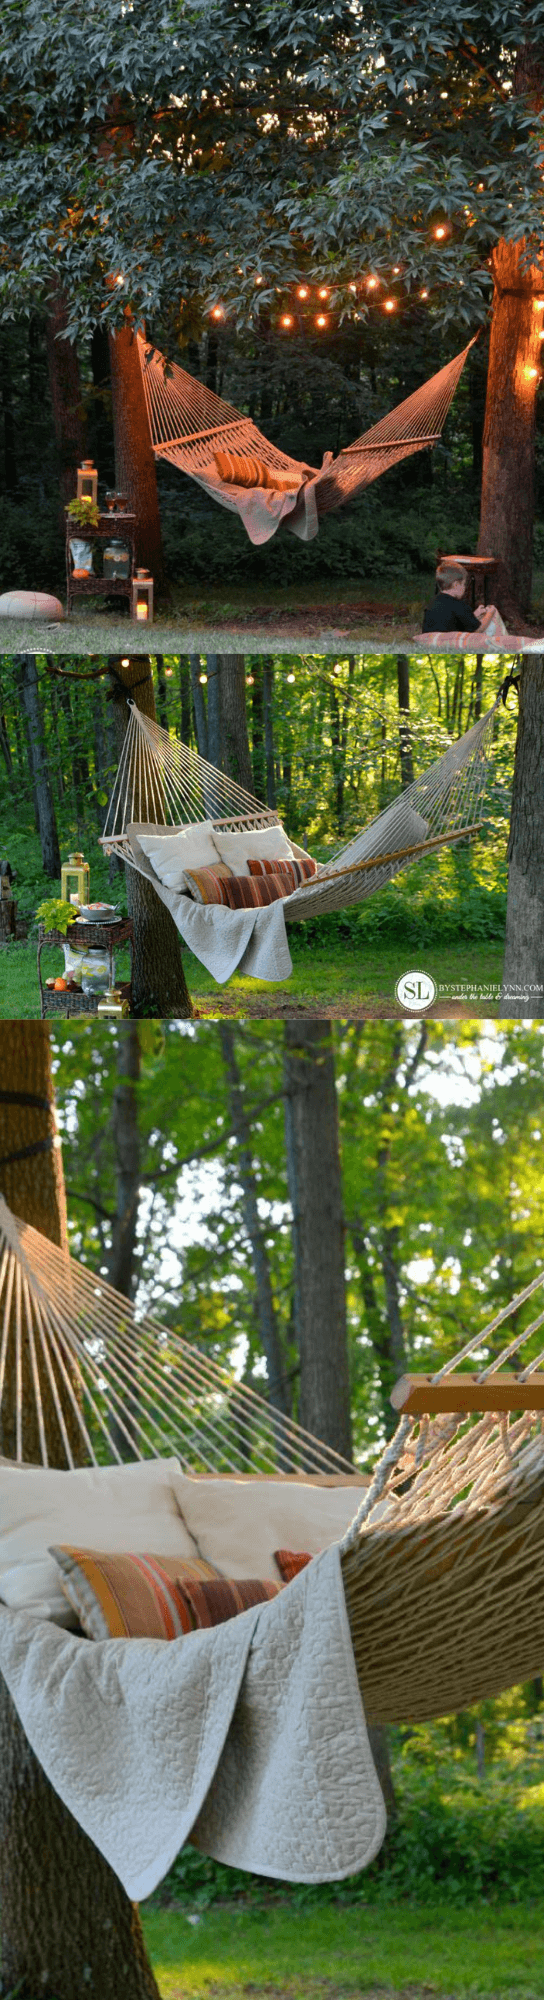 best backyard hammock ideas Lighted Backyard Hammock